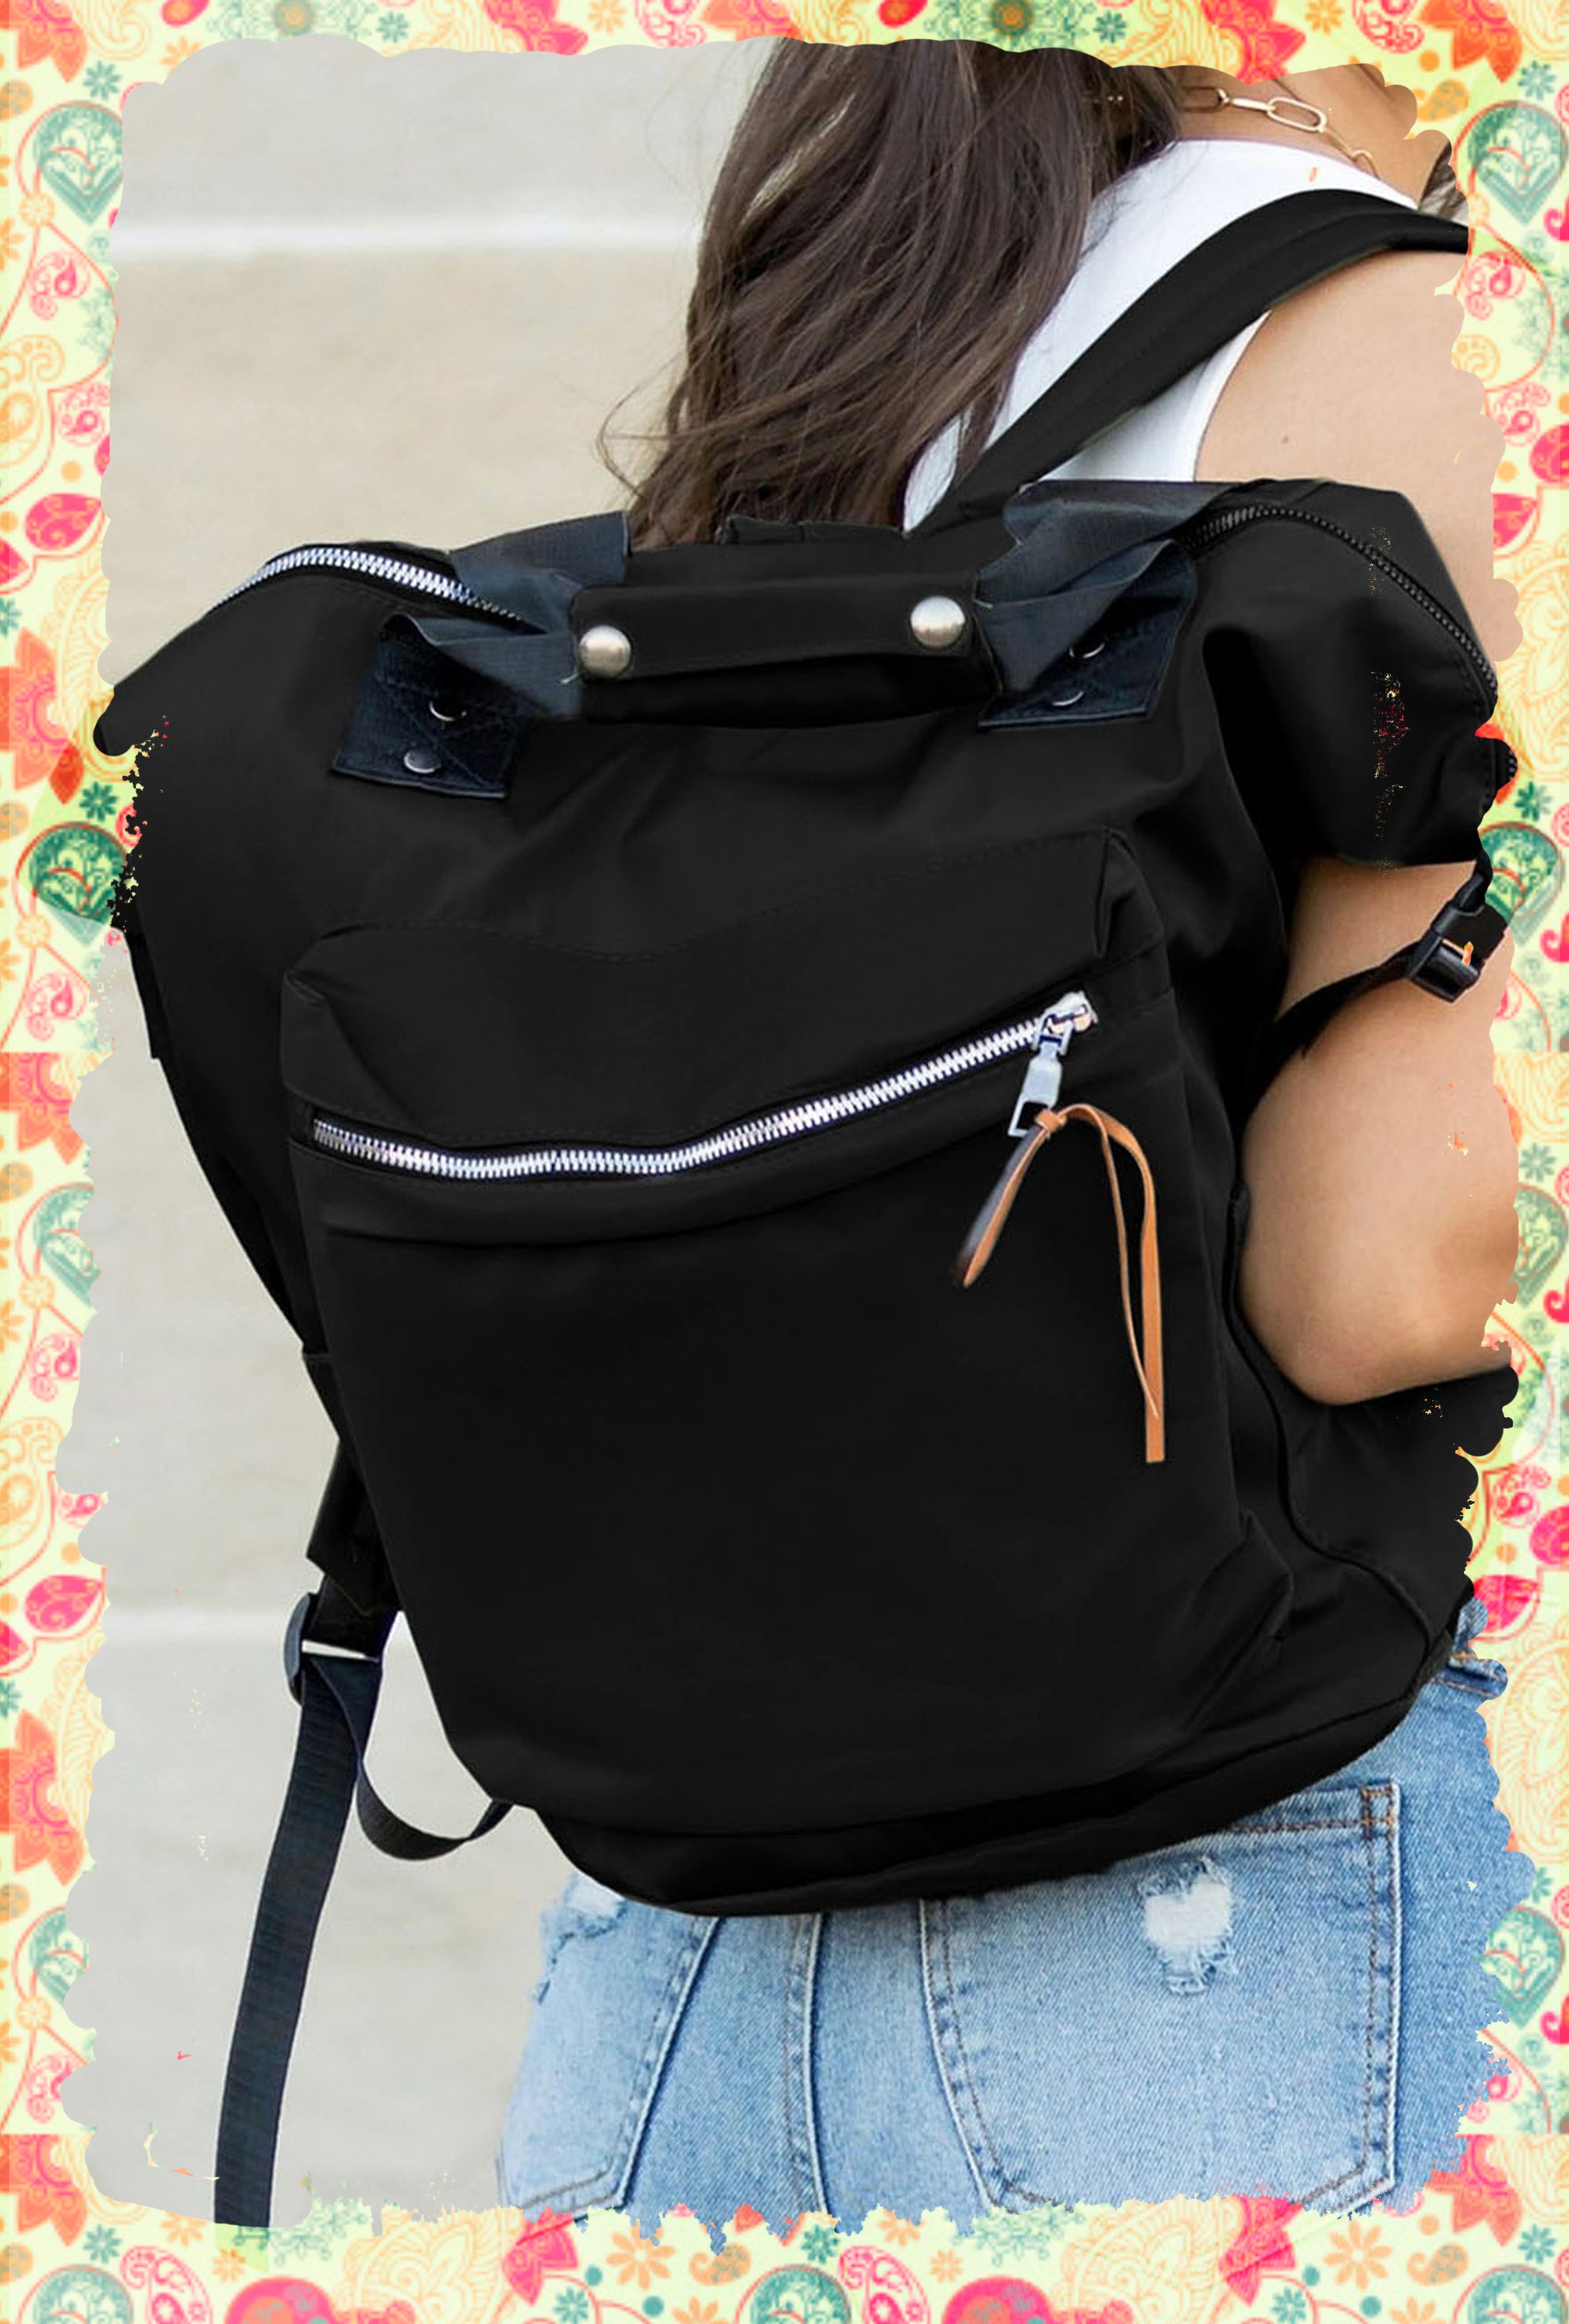 Precious Cargo Nylon Backpack